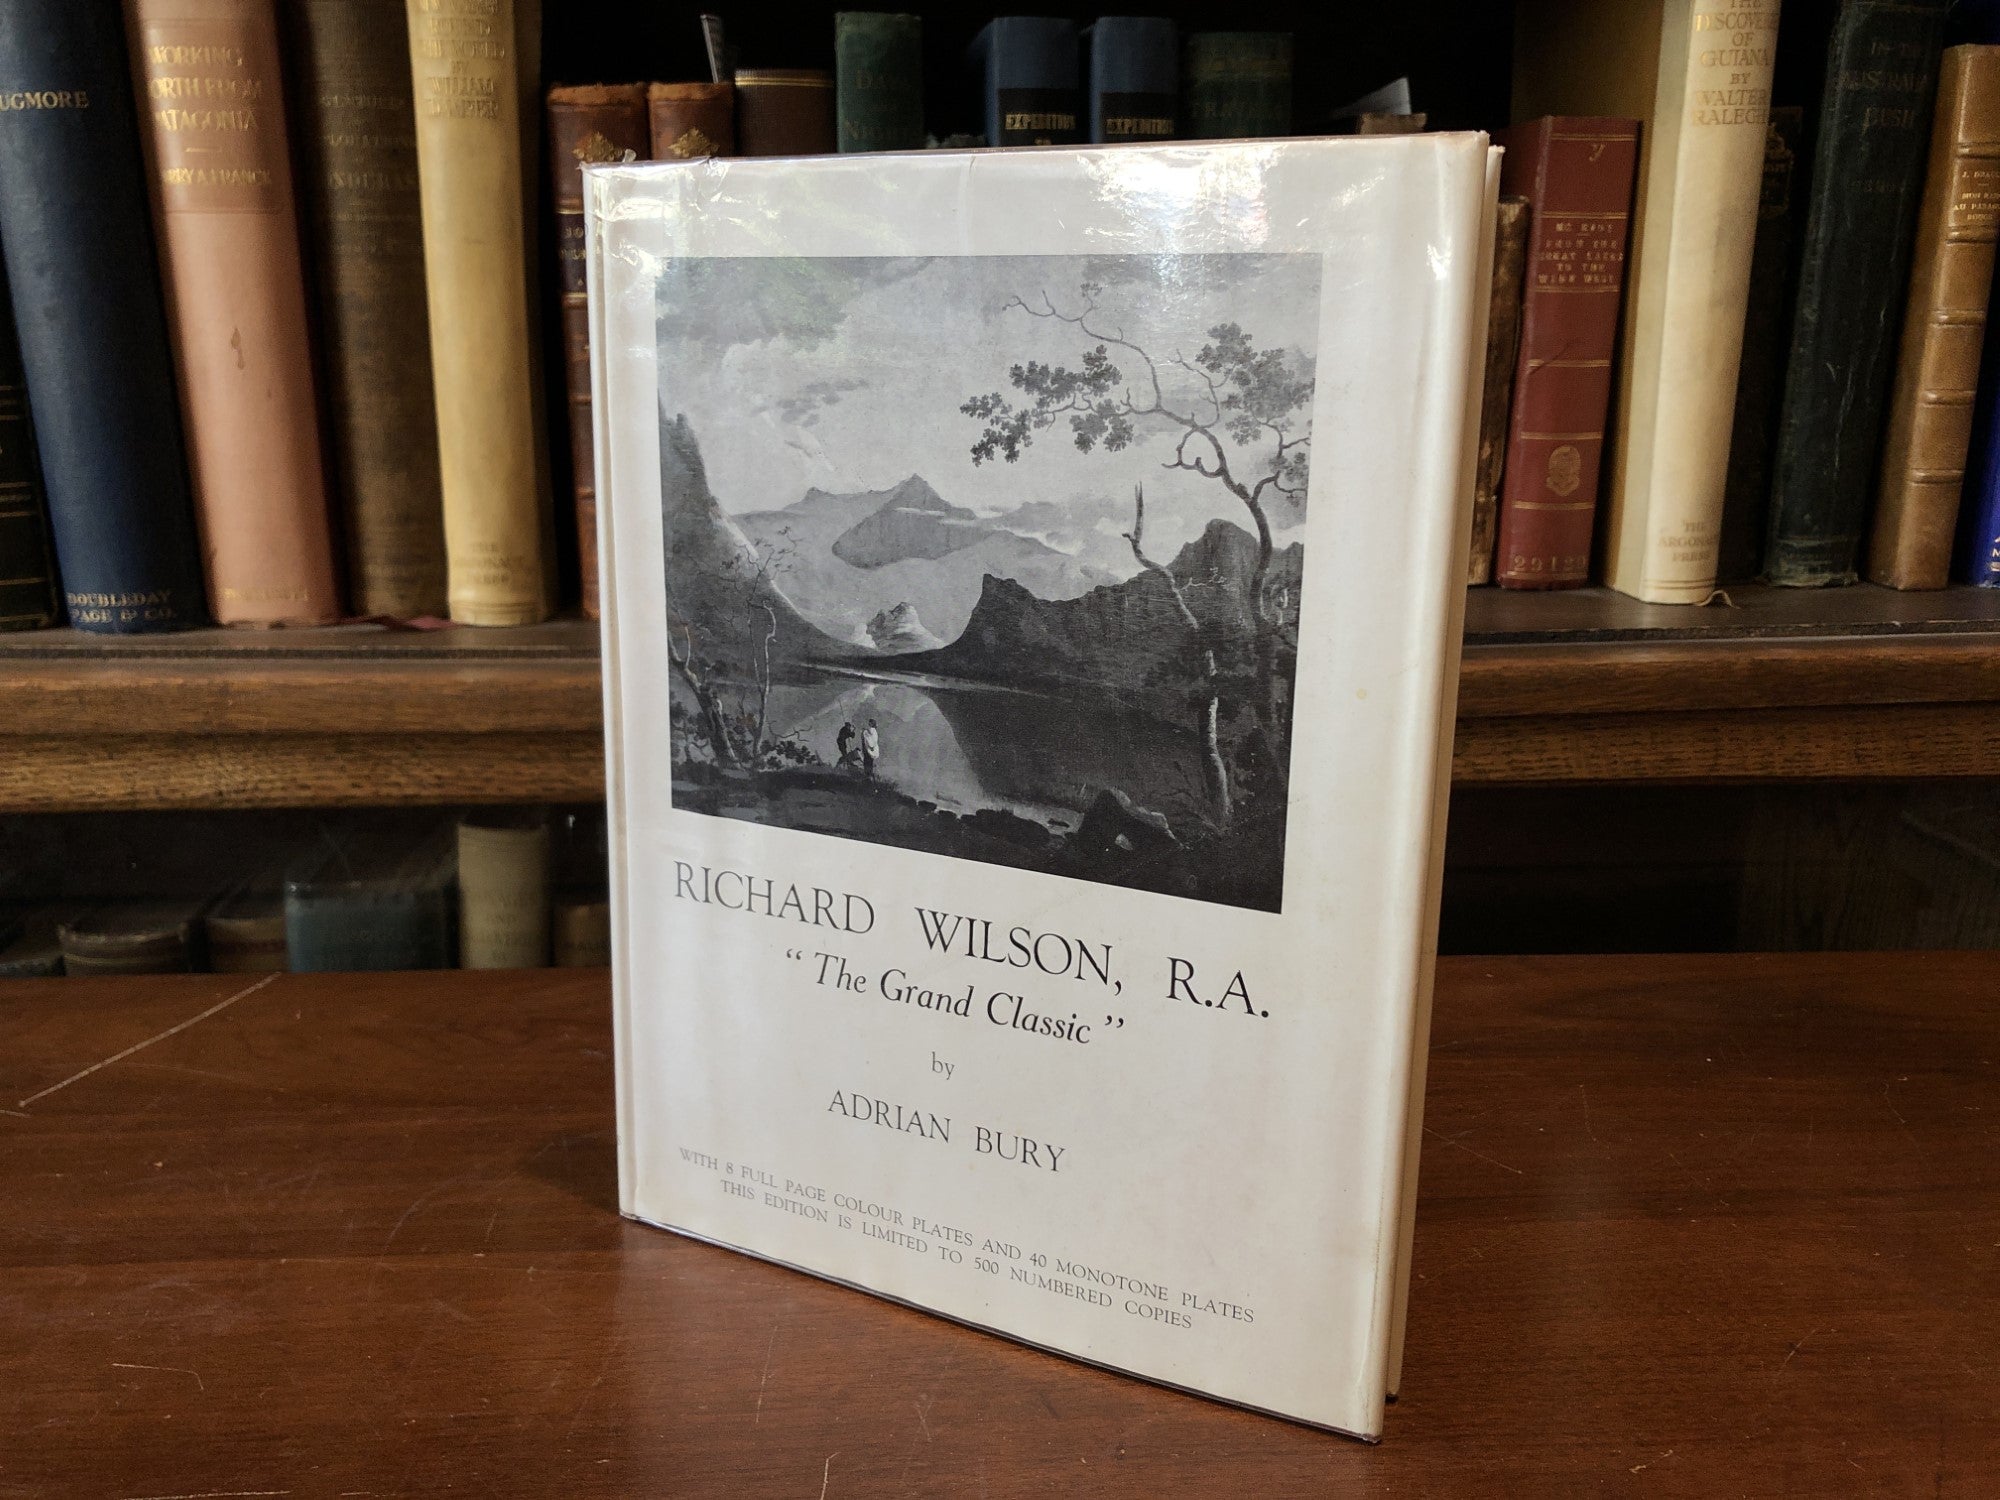 BURY, Adrian - Richard Wilson R.A. The Grand Classic